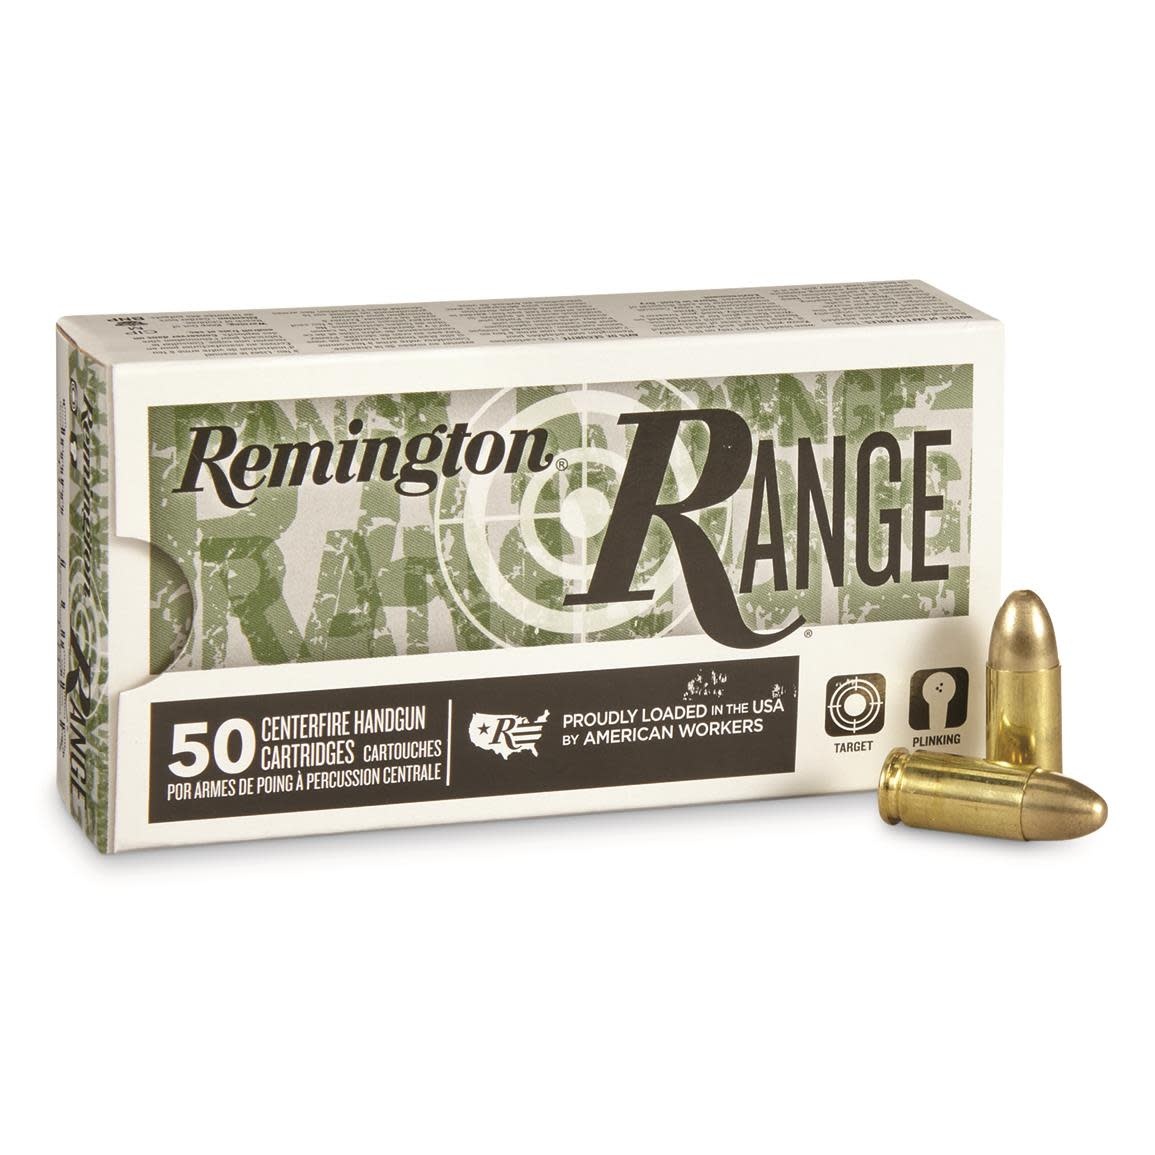 Remington T9MM3 RANGE Pistol Ammo - The Great Outdoors